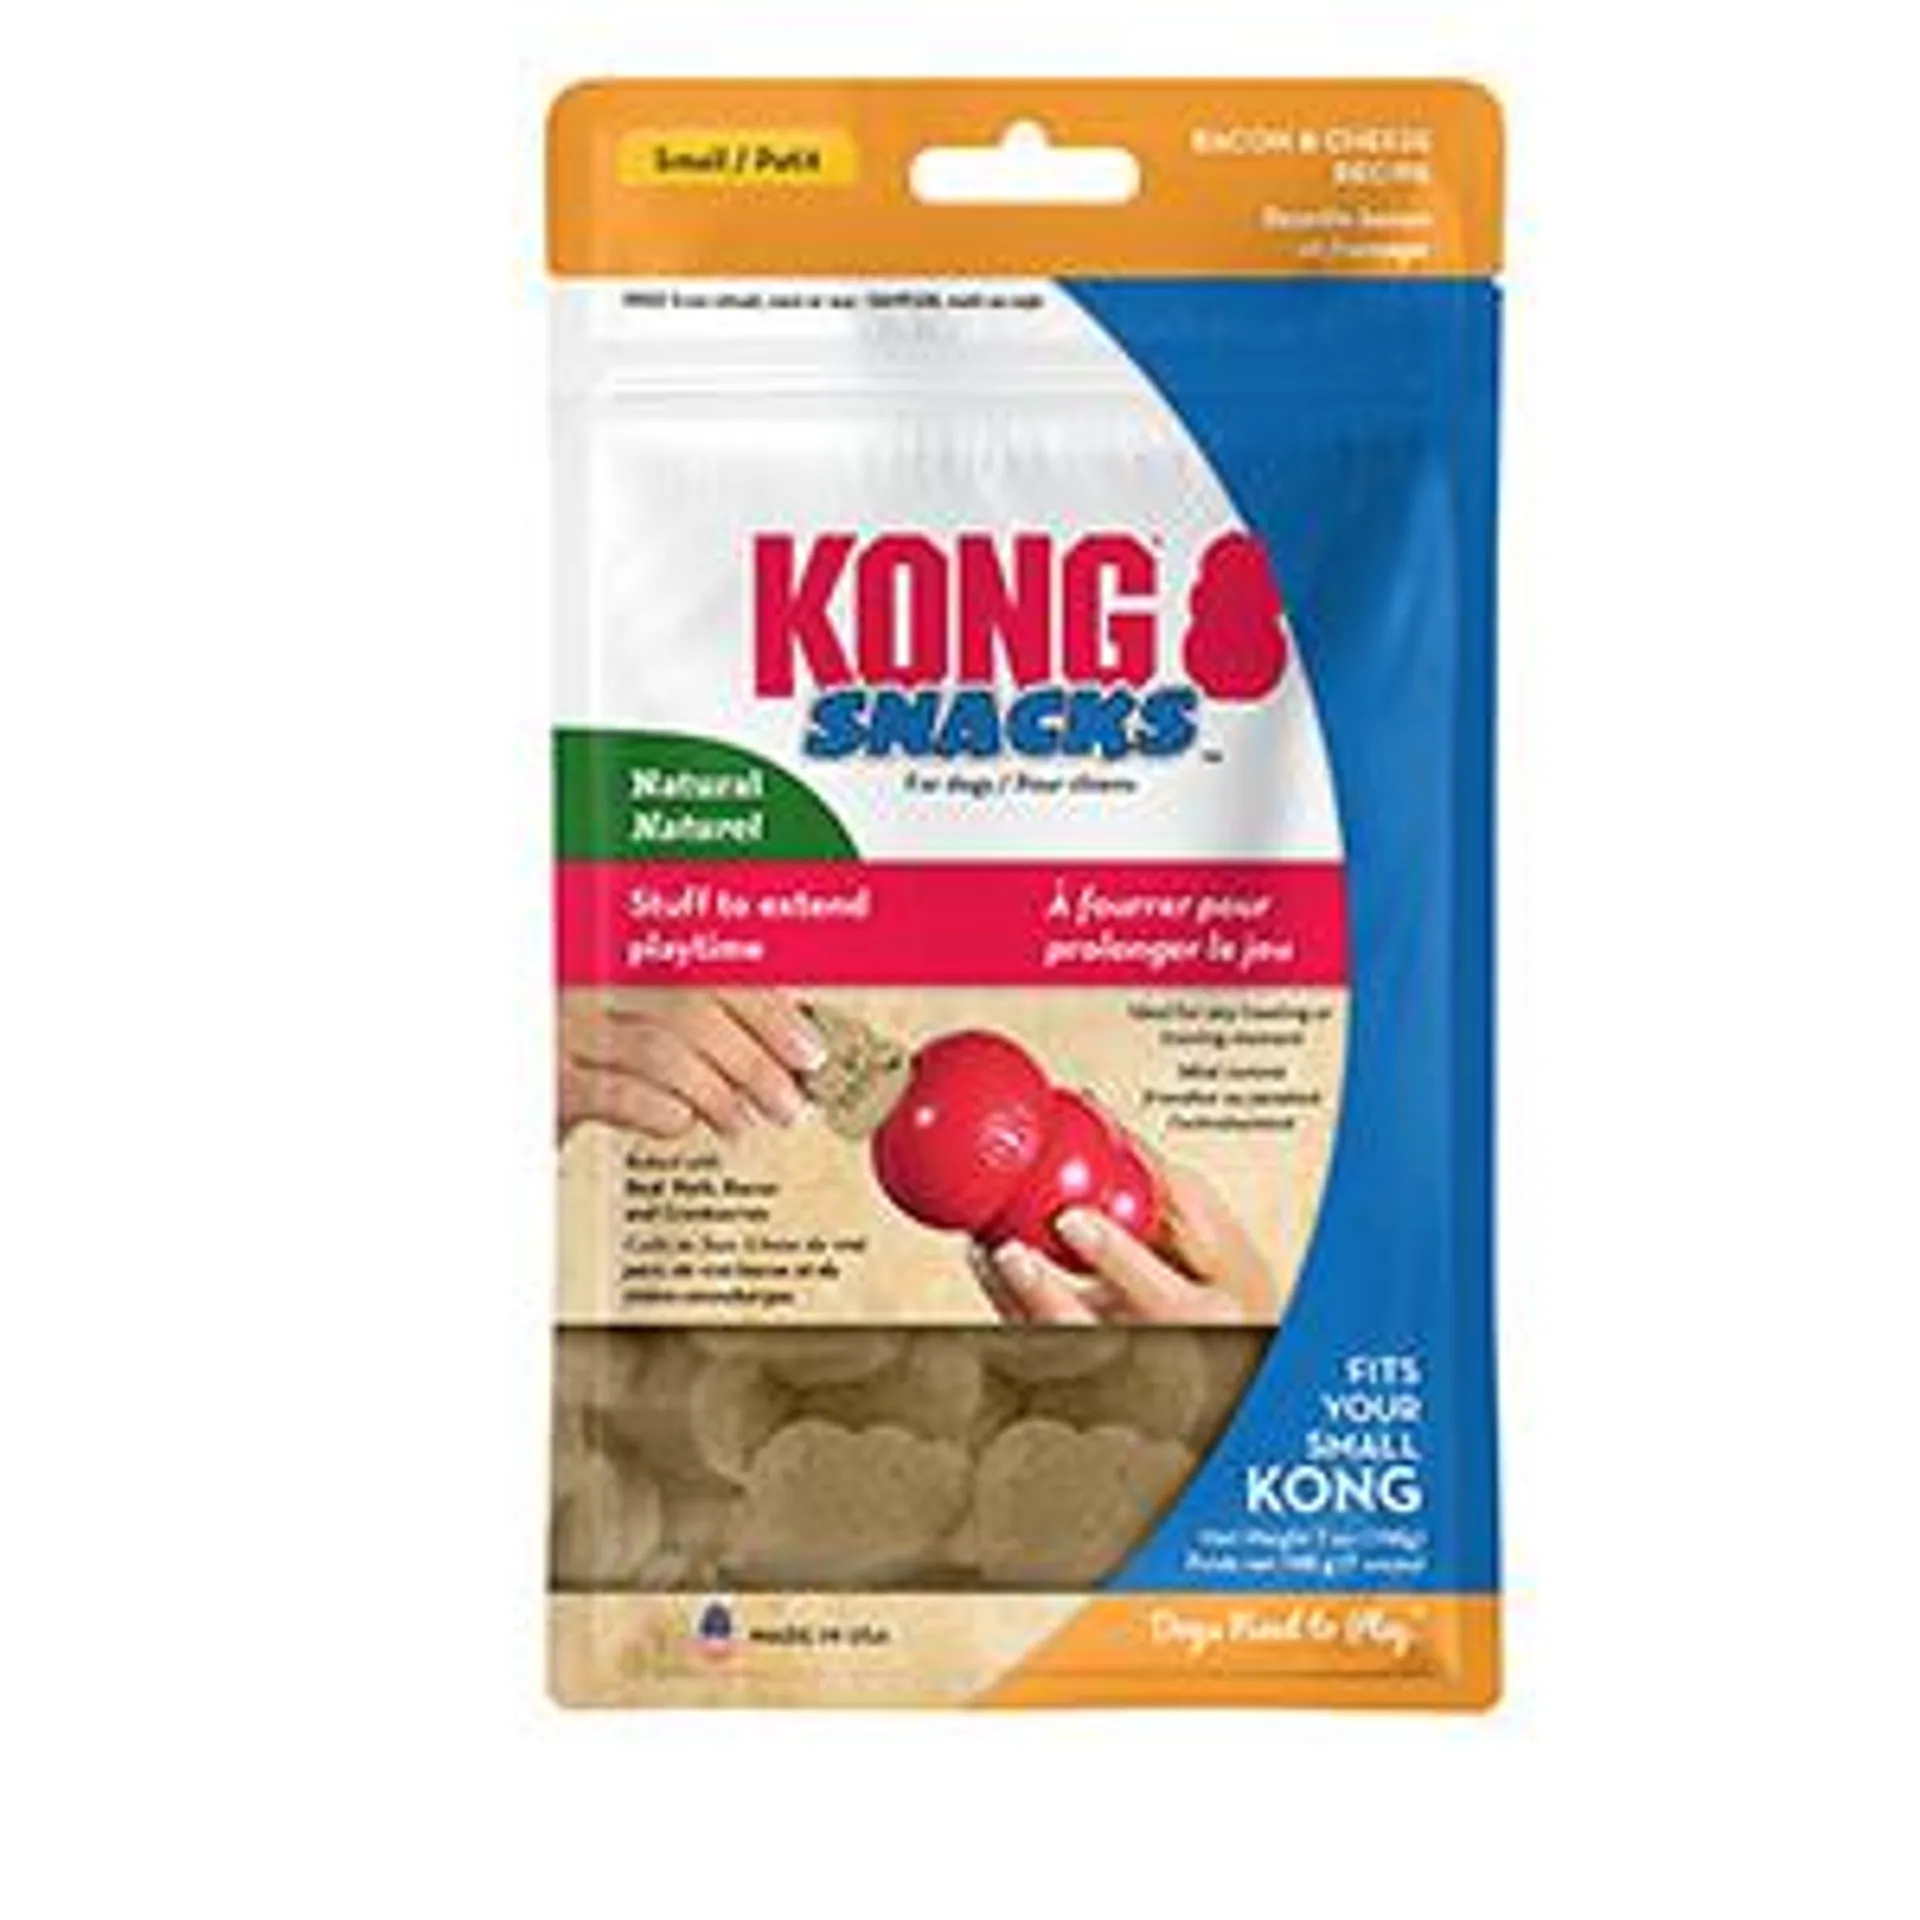 Kong Snacks Bacon & Cheese Dog Treat Small